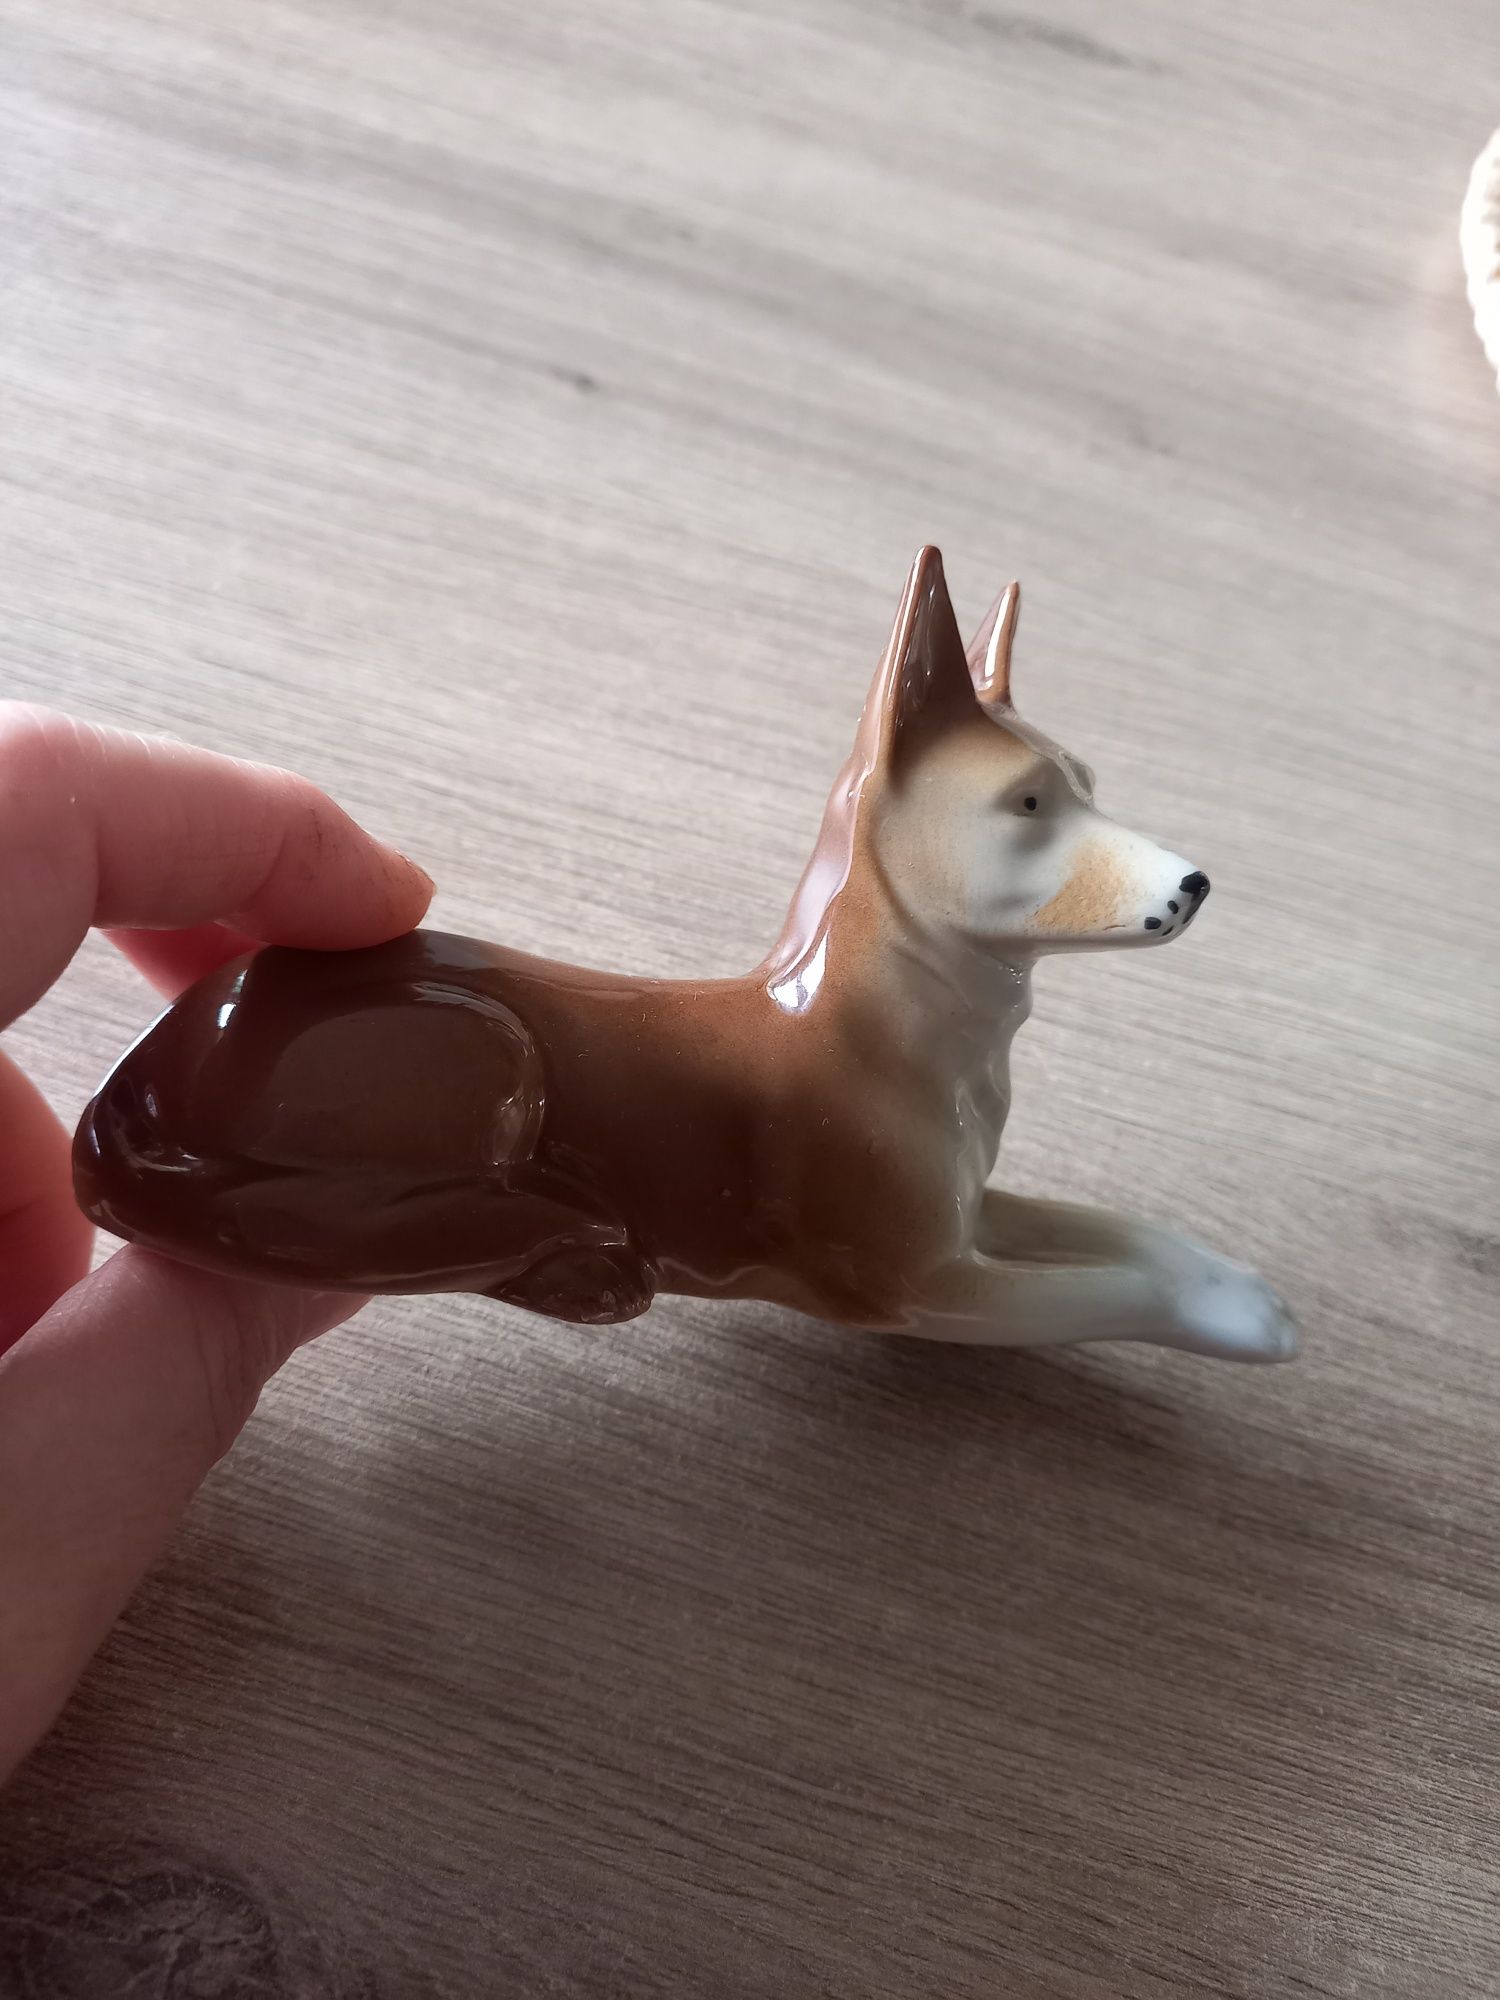 Figurka porcelanowa psa